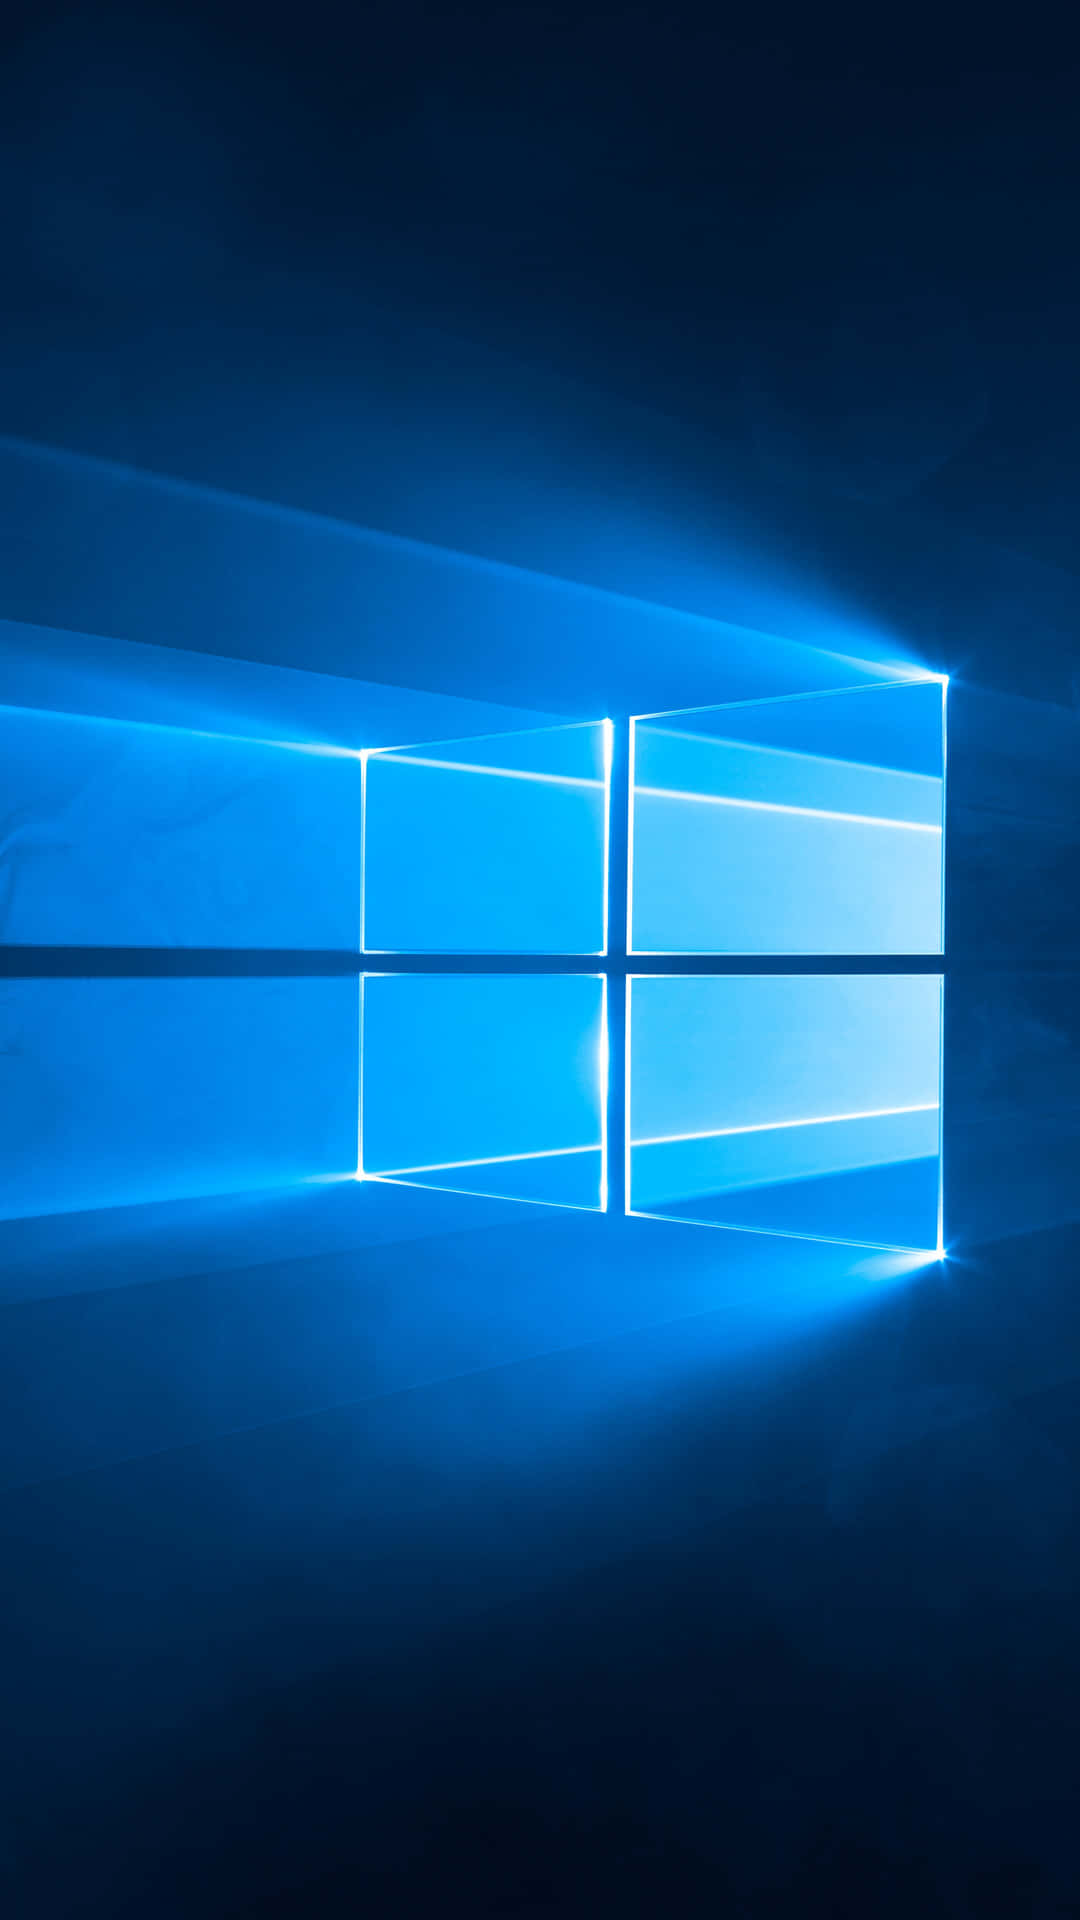 Captivating Windows 10 Abstract Wallpaper